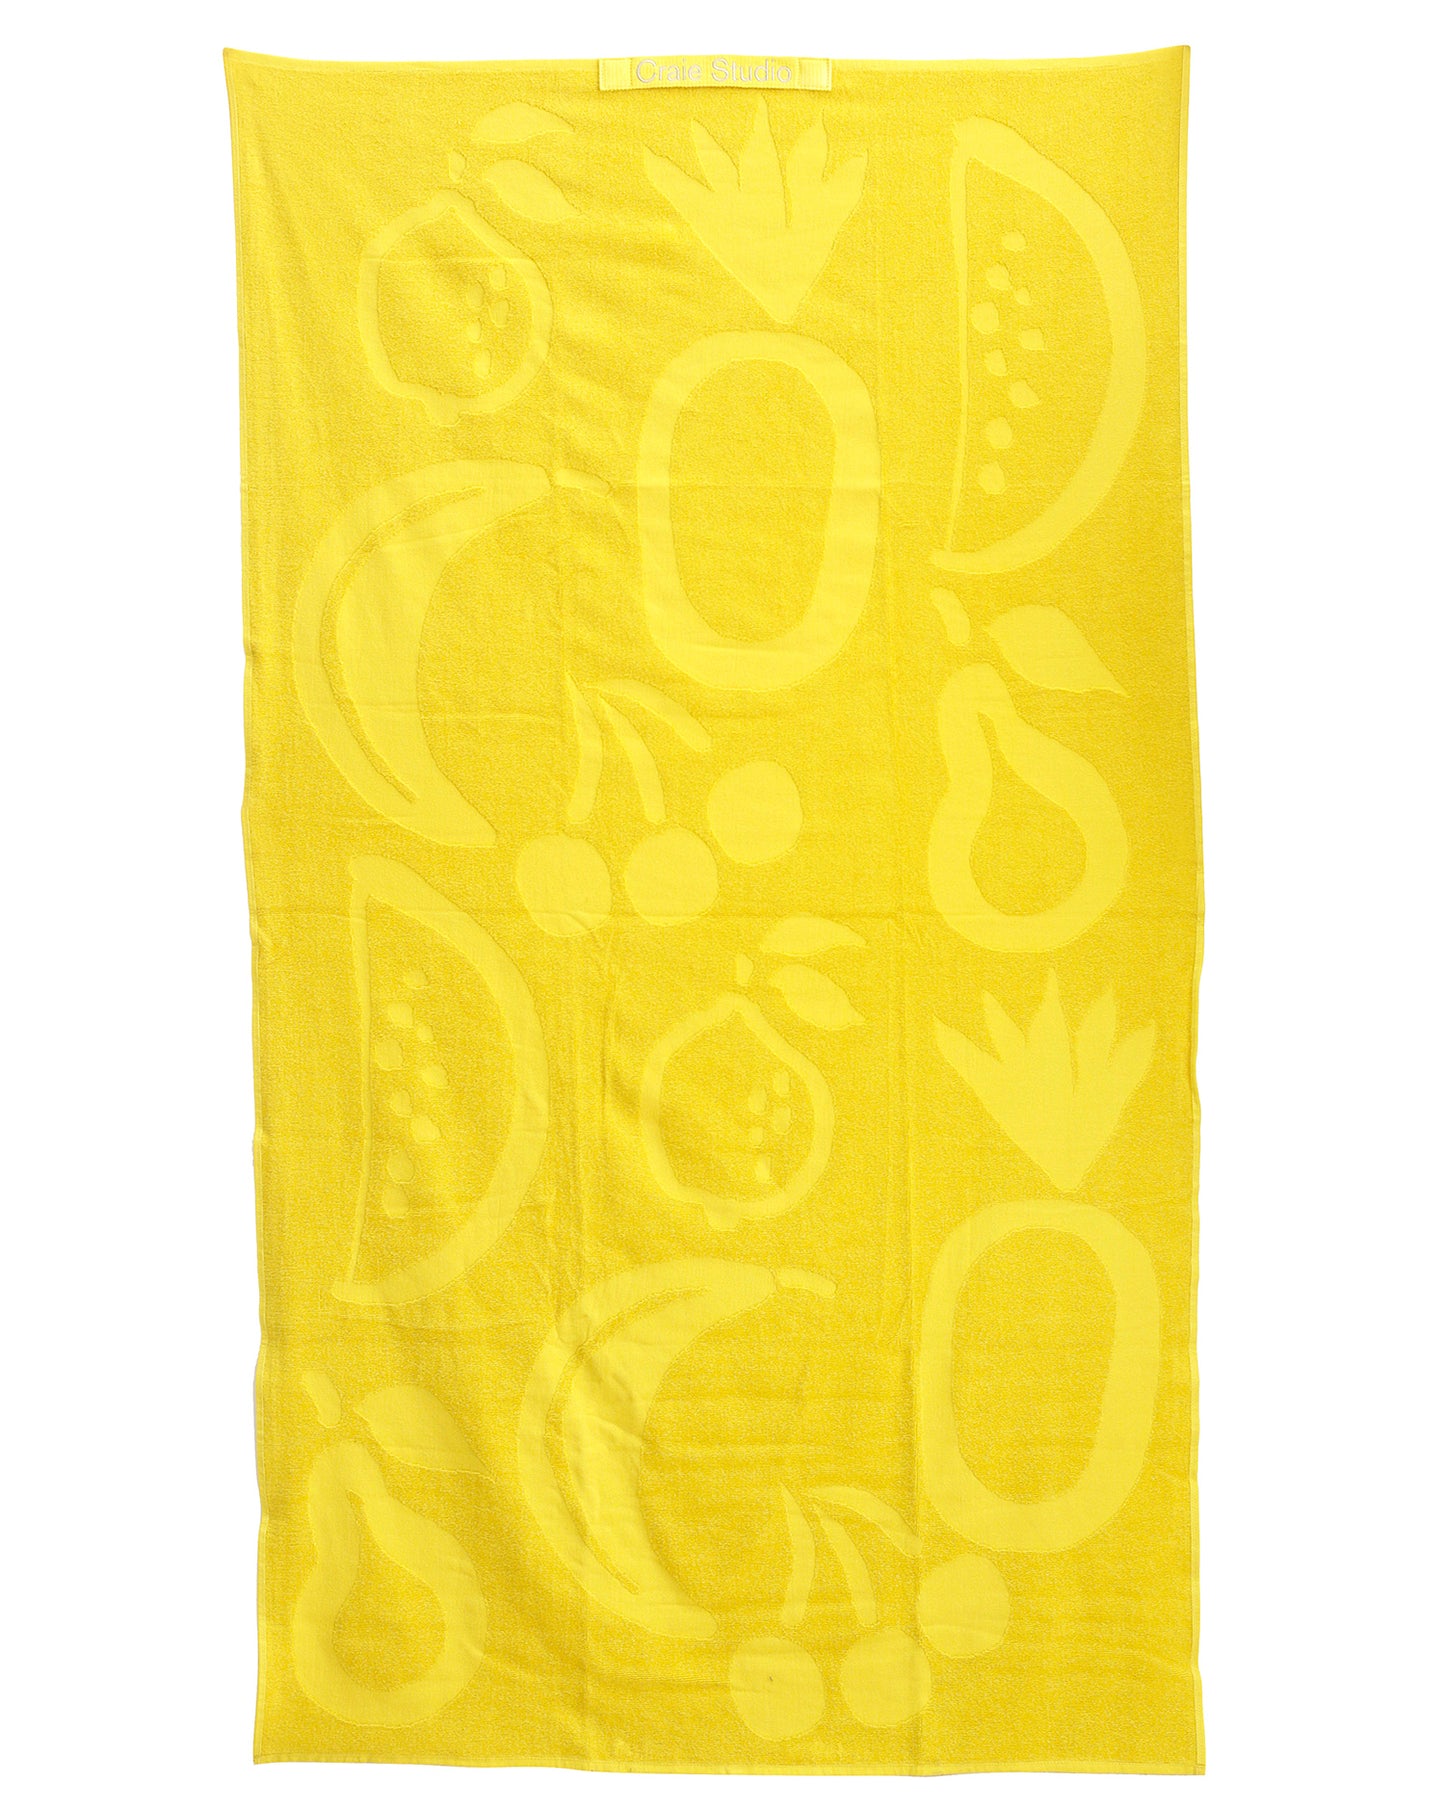 Beach Towel in Fruit Lemon